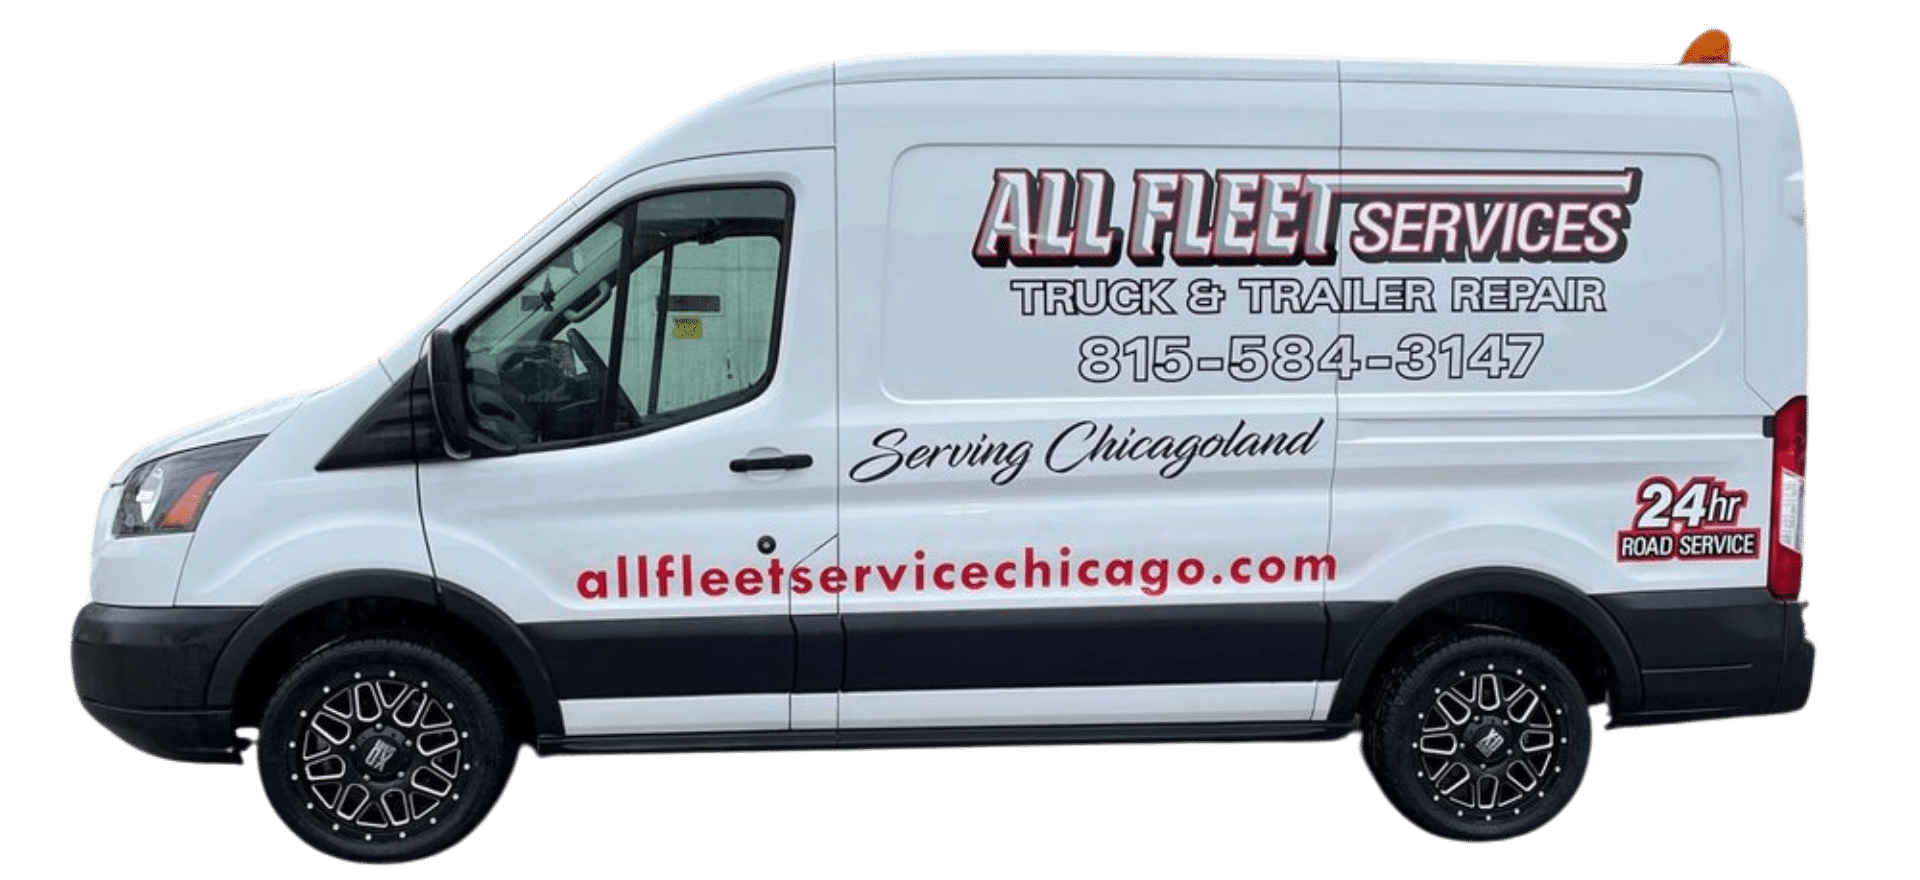 All Fleet Services - Truck & Trailer - Transparent Background